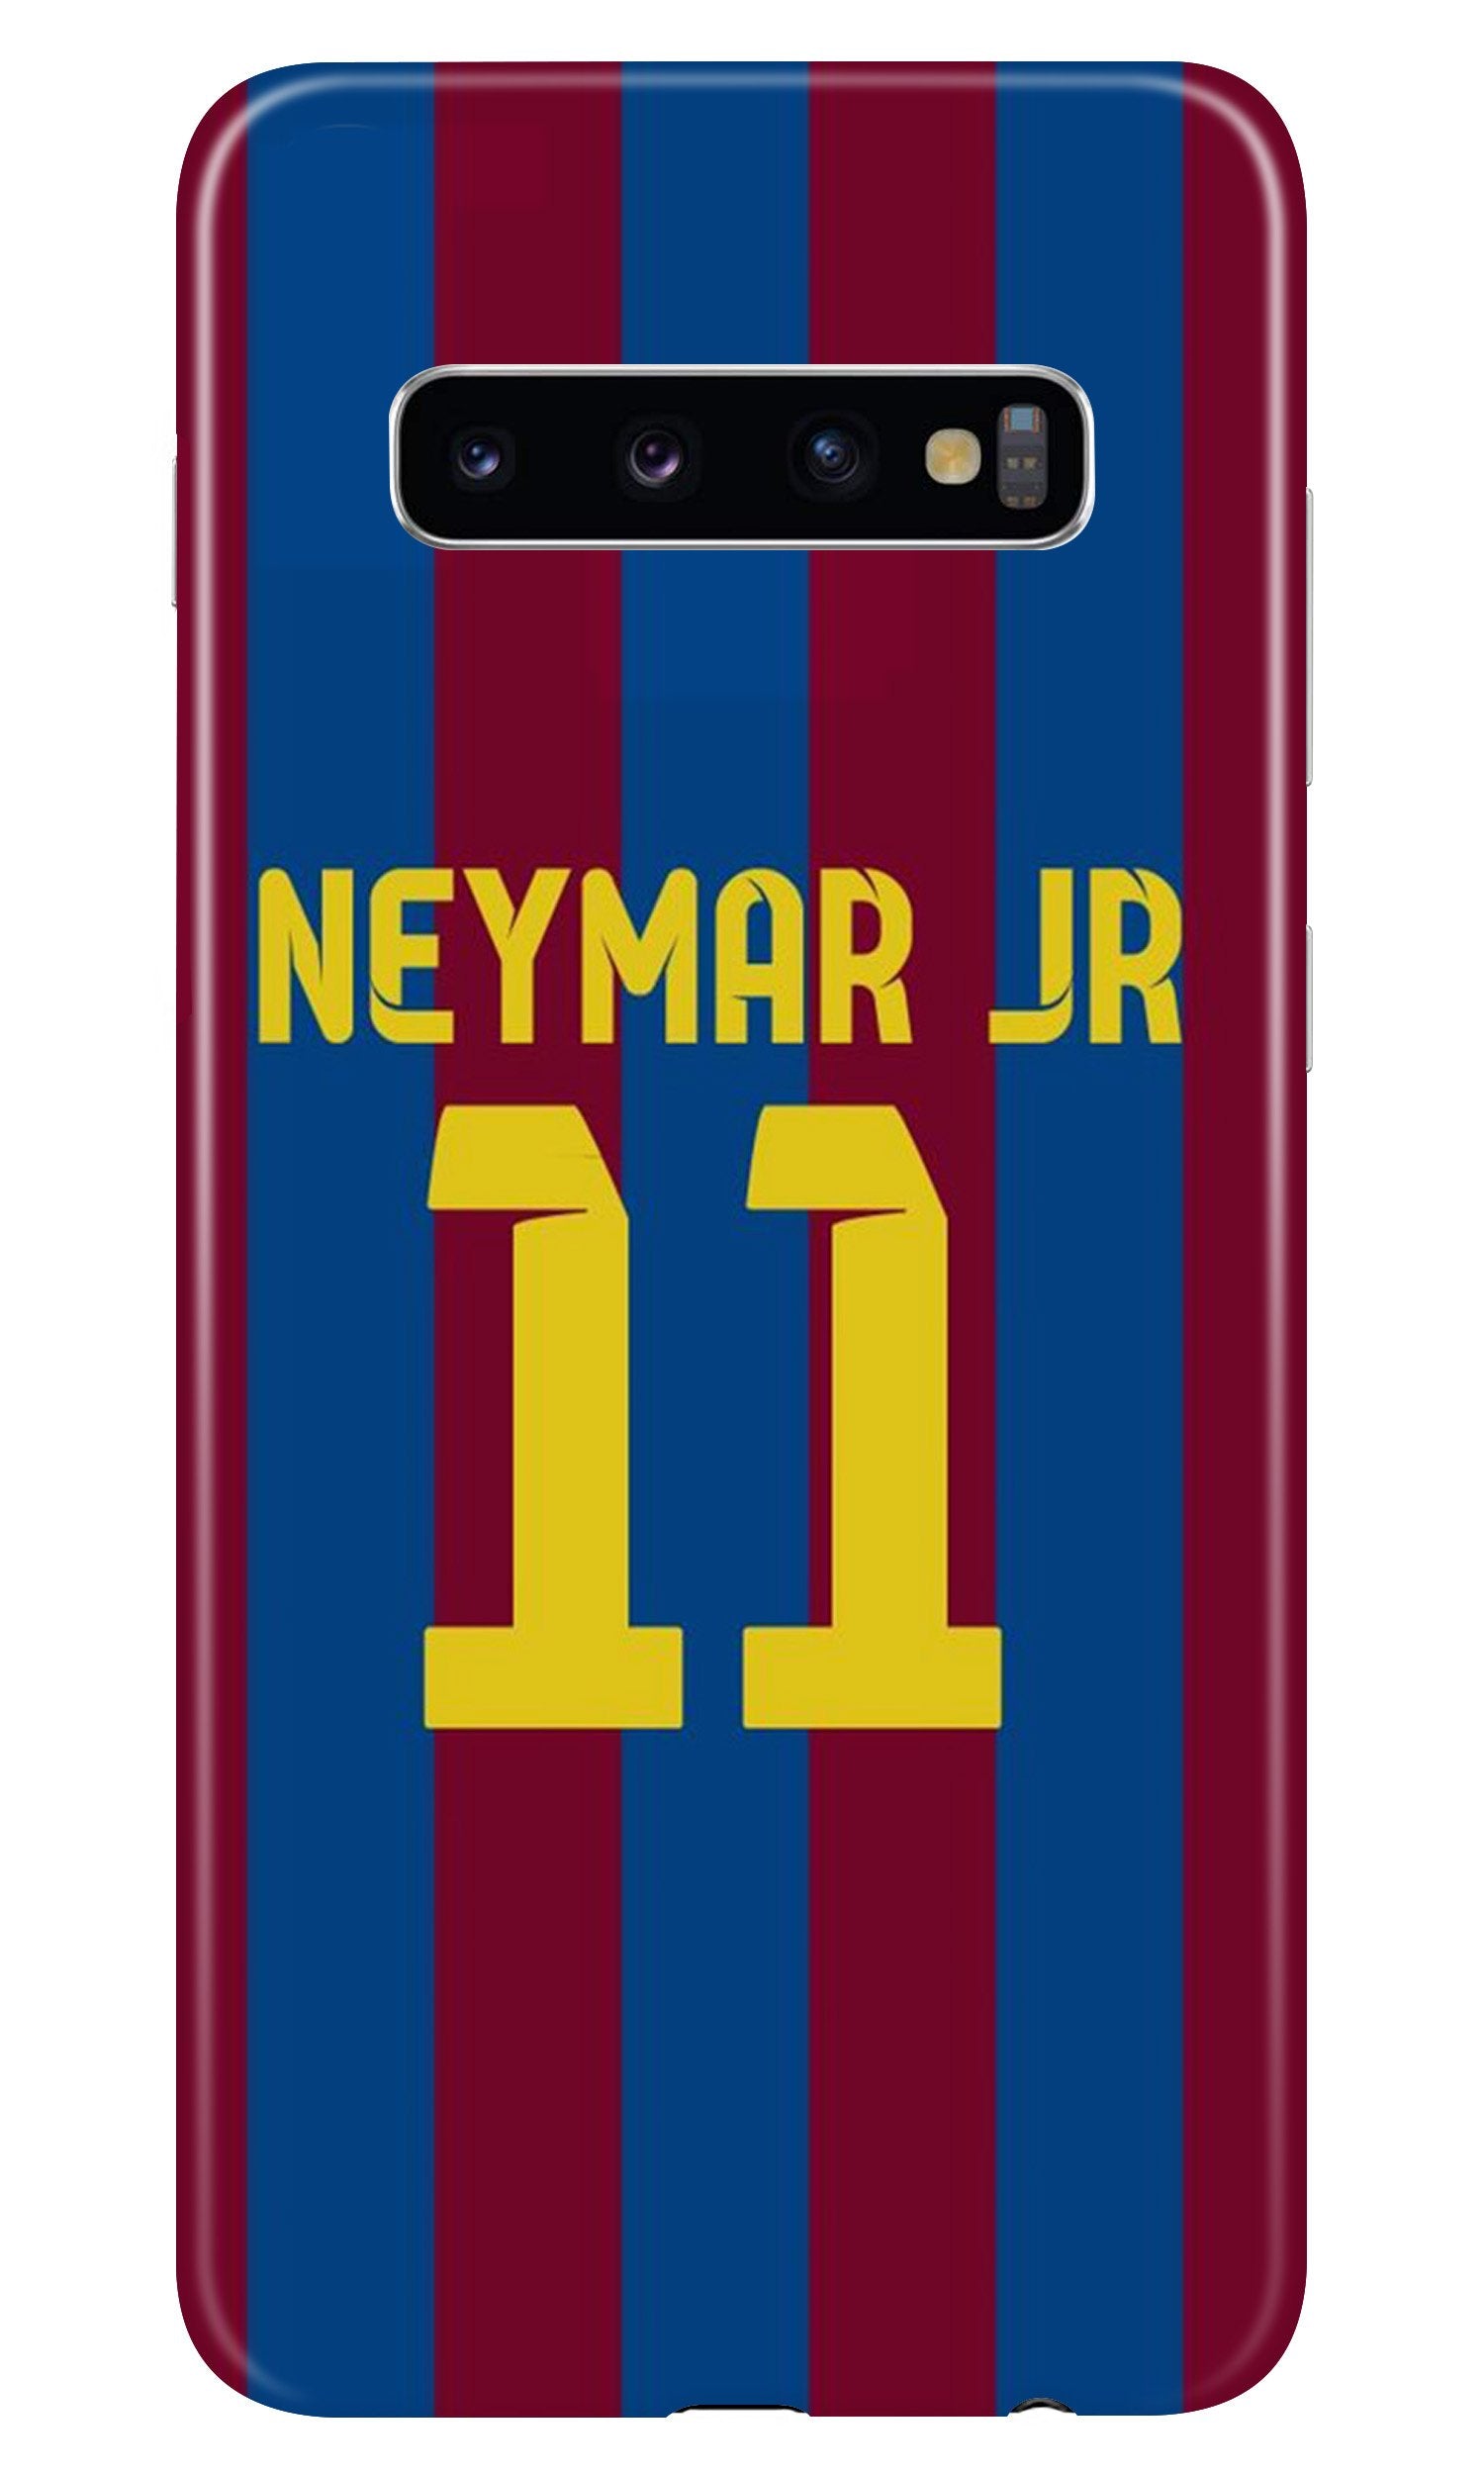 Neymar Jr Case for Samsung Galaxy S10(Design - 162)